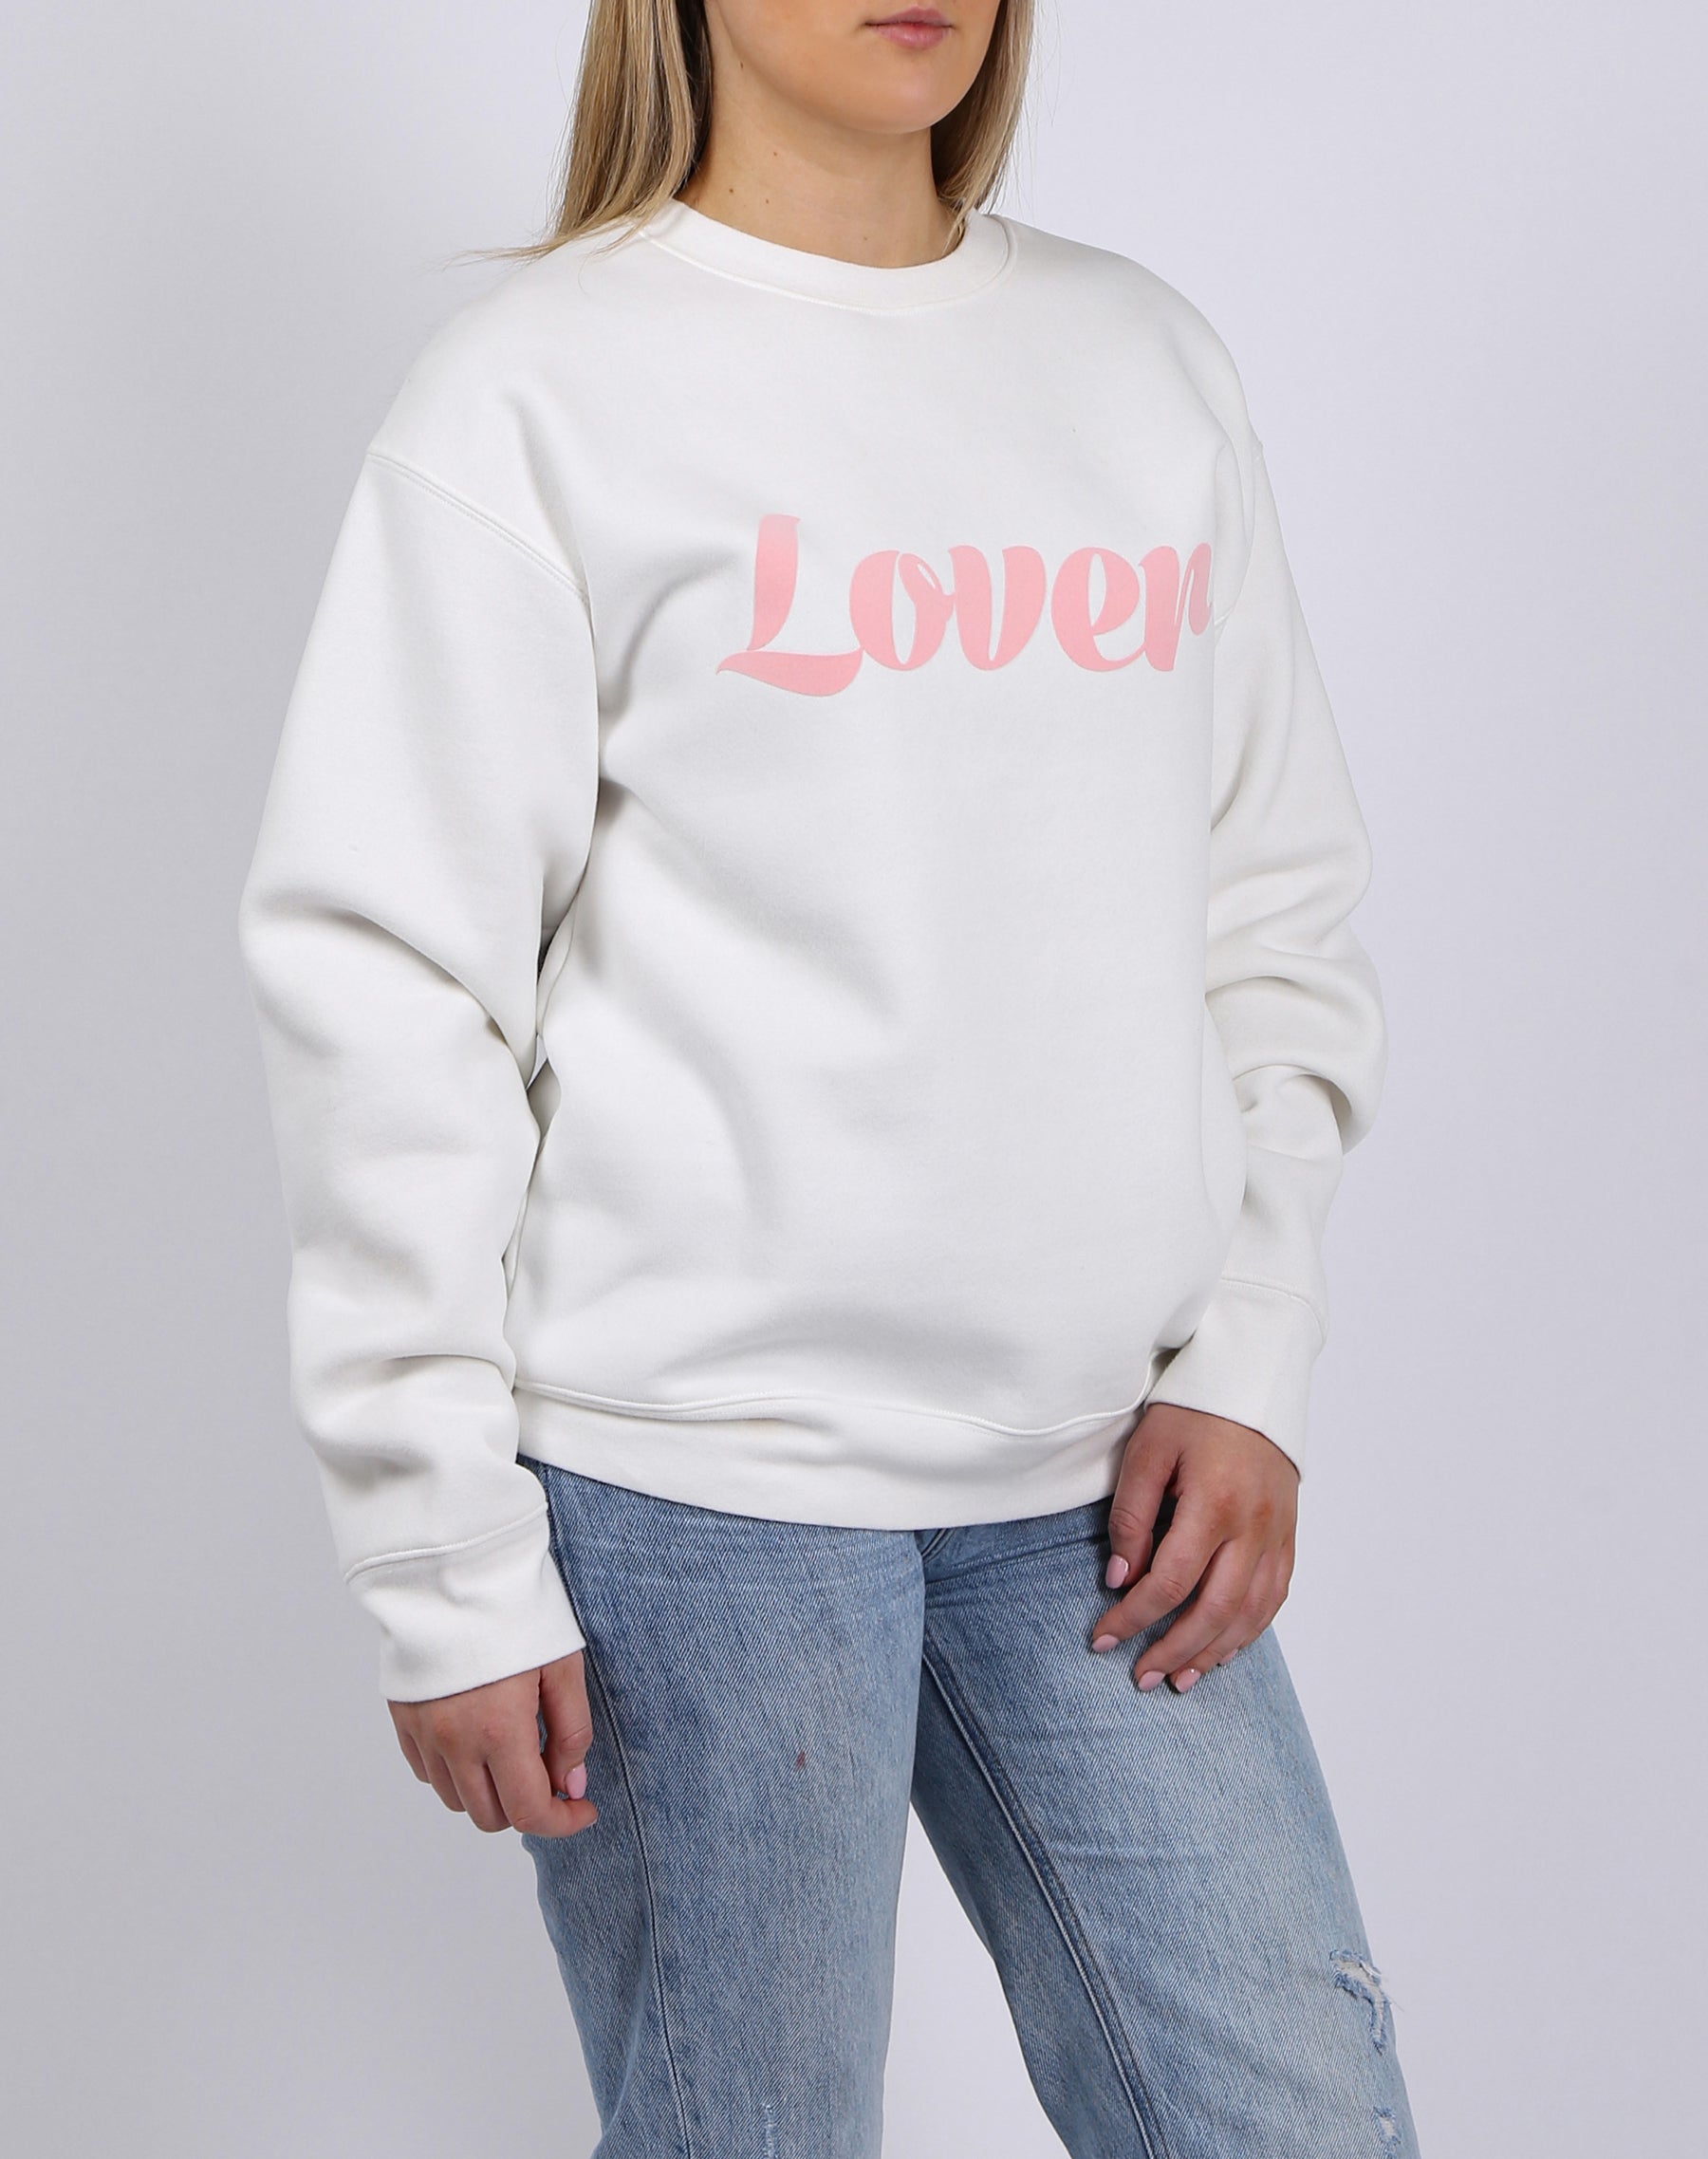 The "LOVER" Classic Crew Neck Sweatshirt | Marshmallow